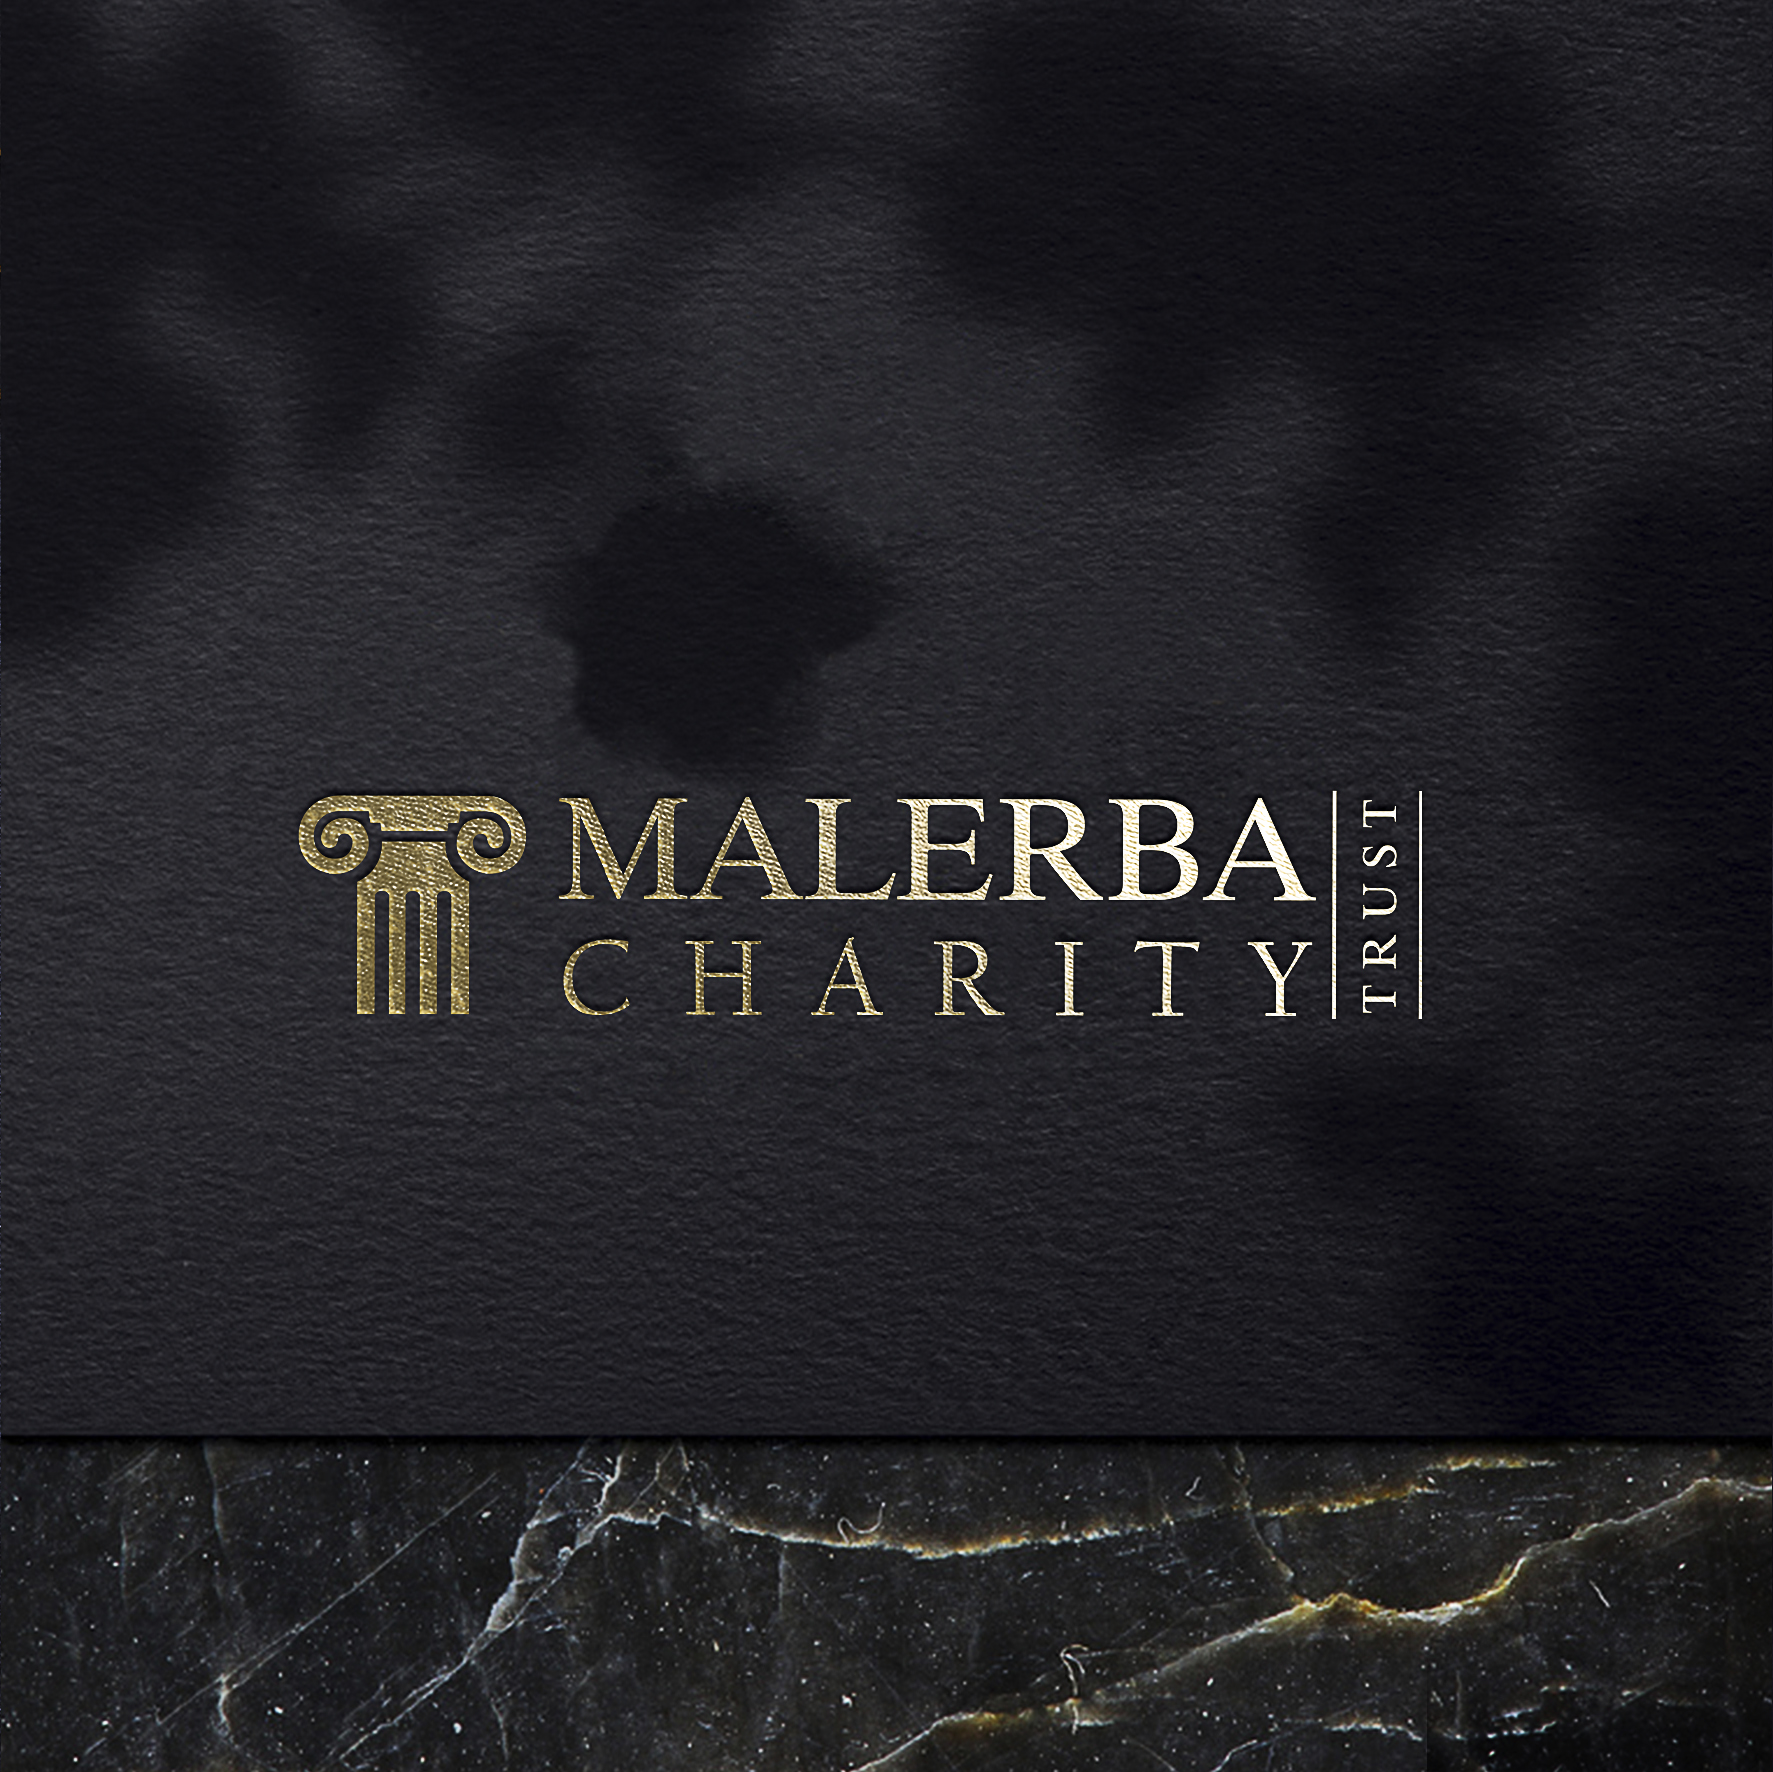 Malerba Charity